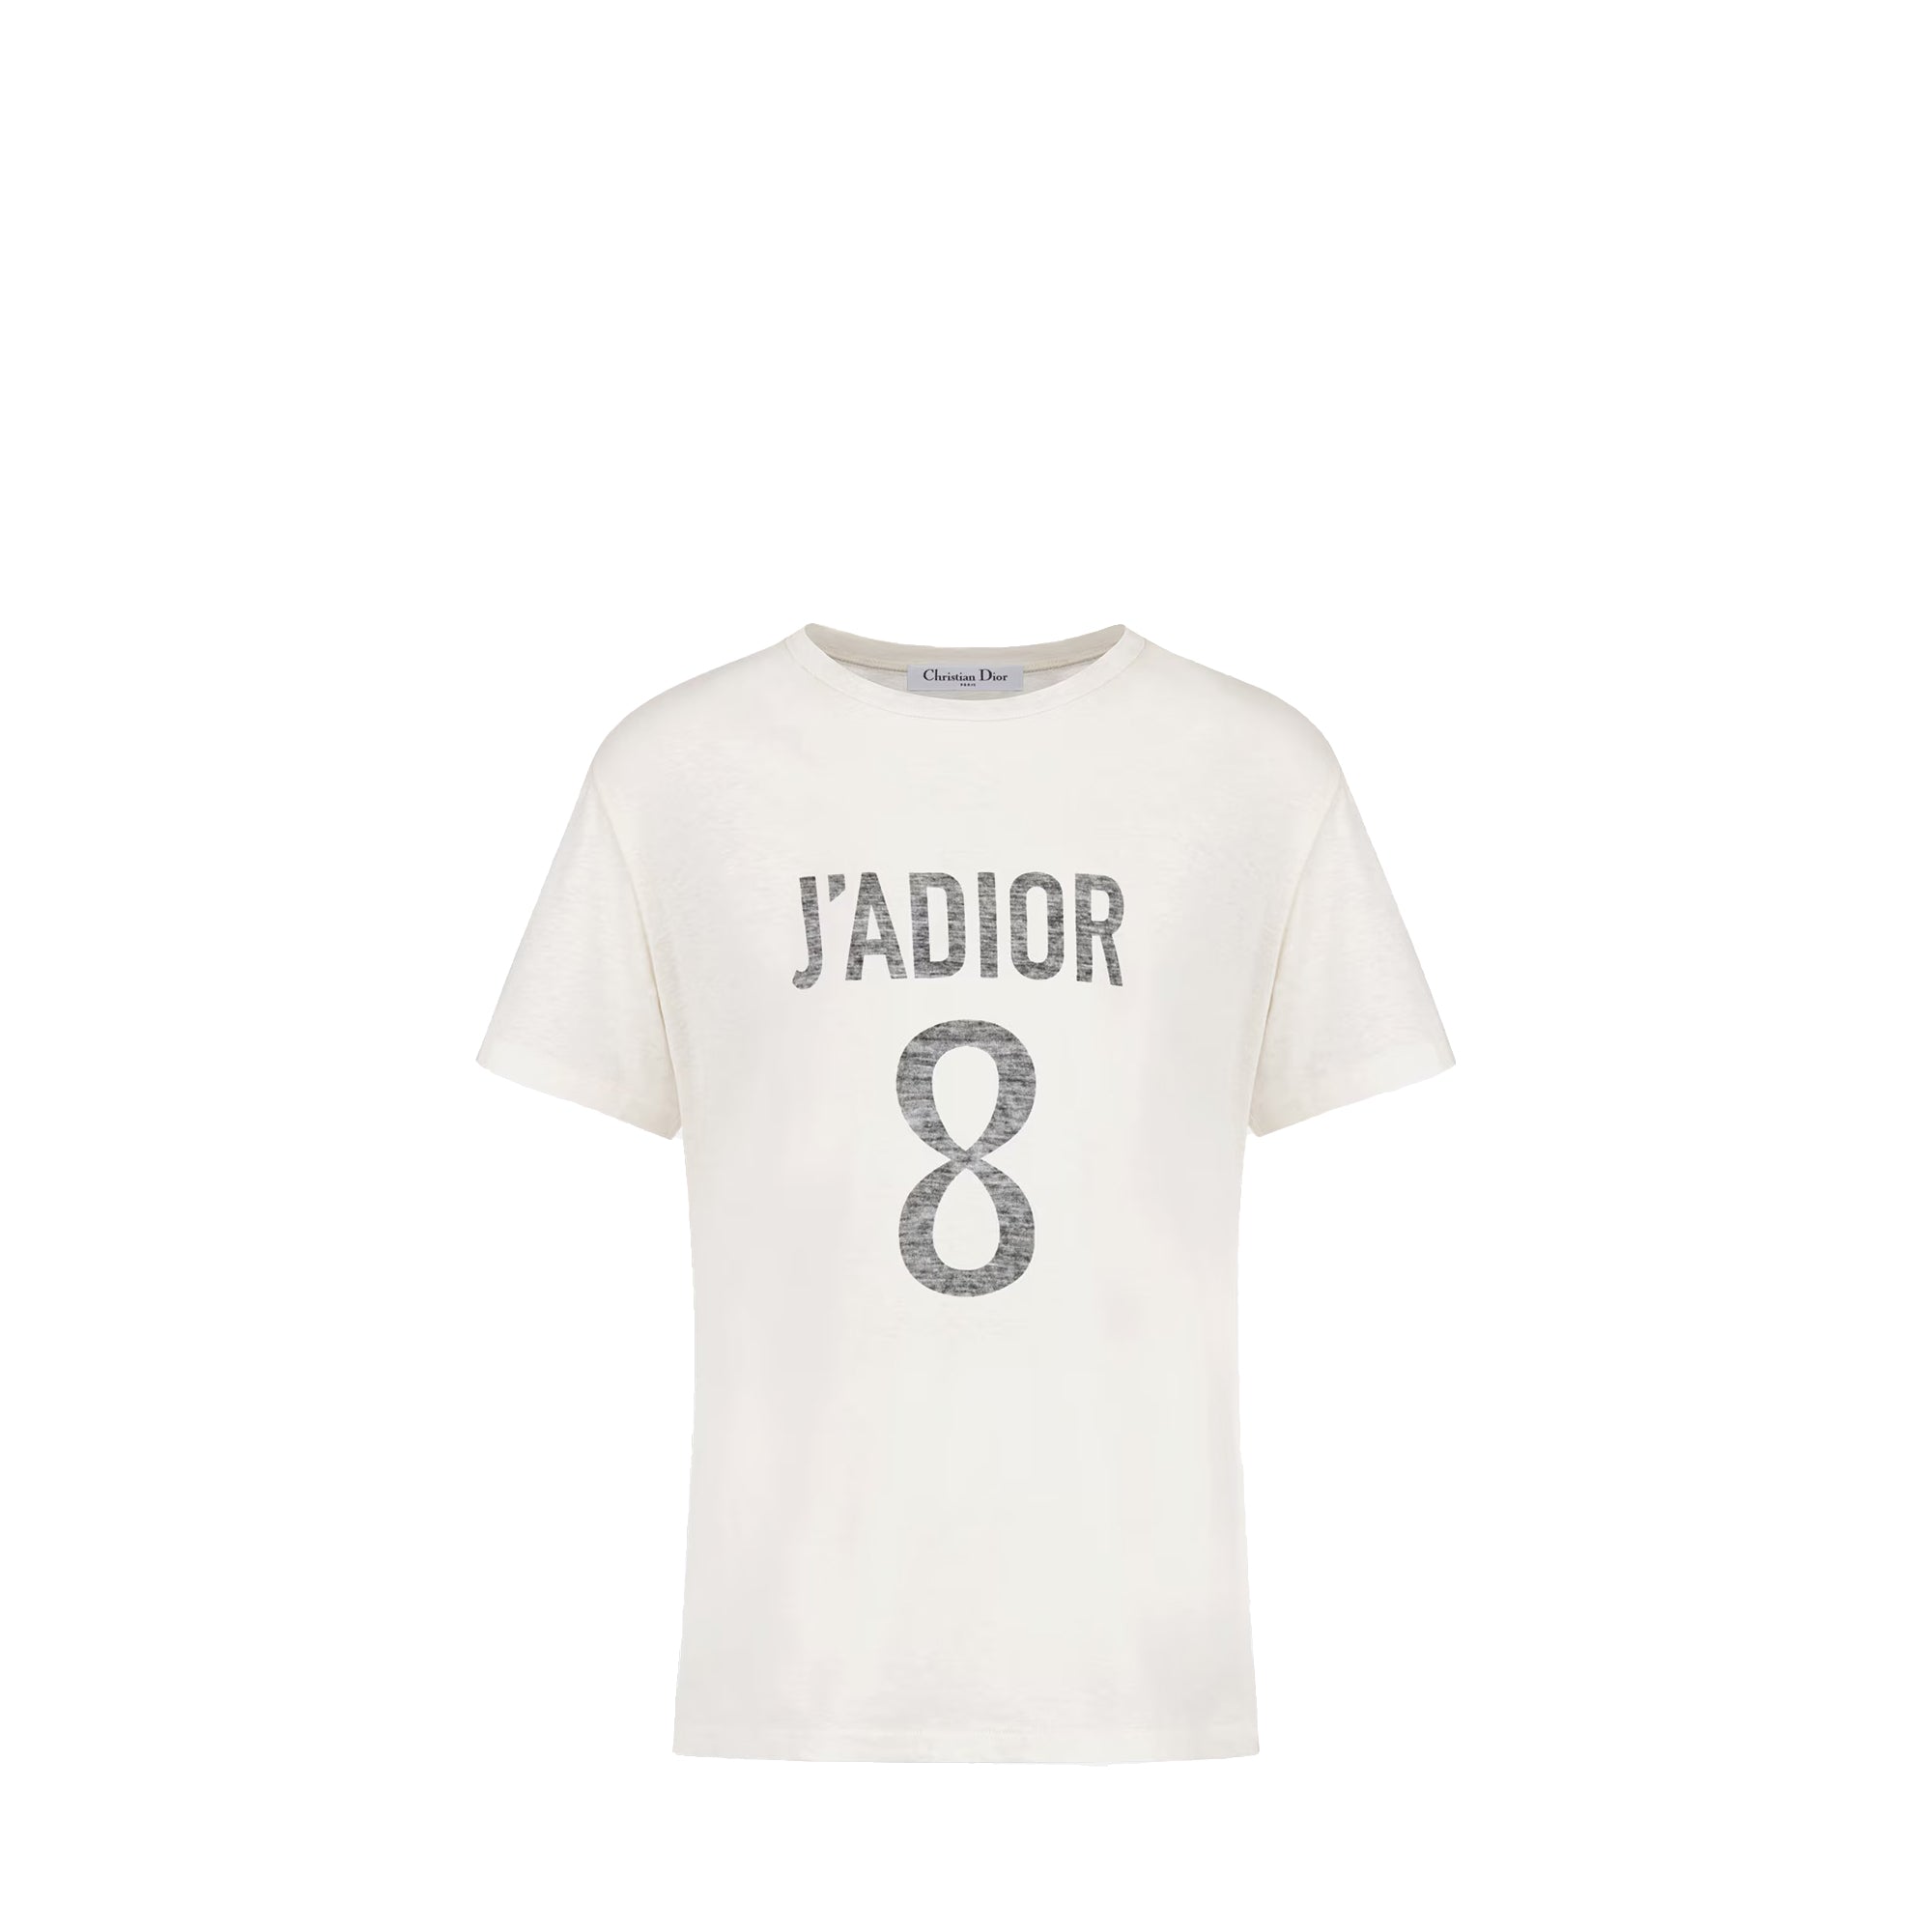 DIOR - Tee-shirt J'Adior 8 (S)